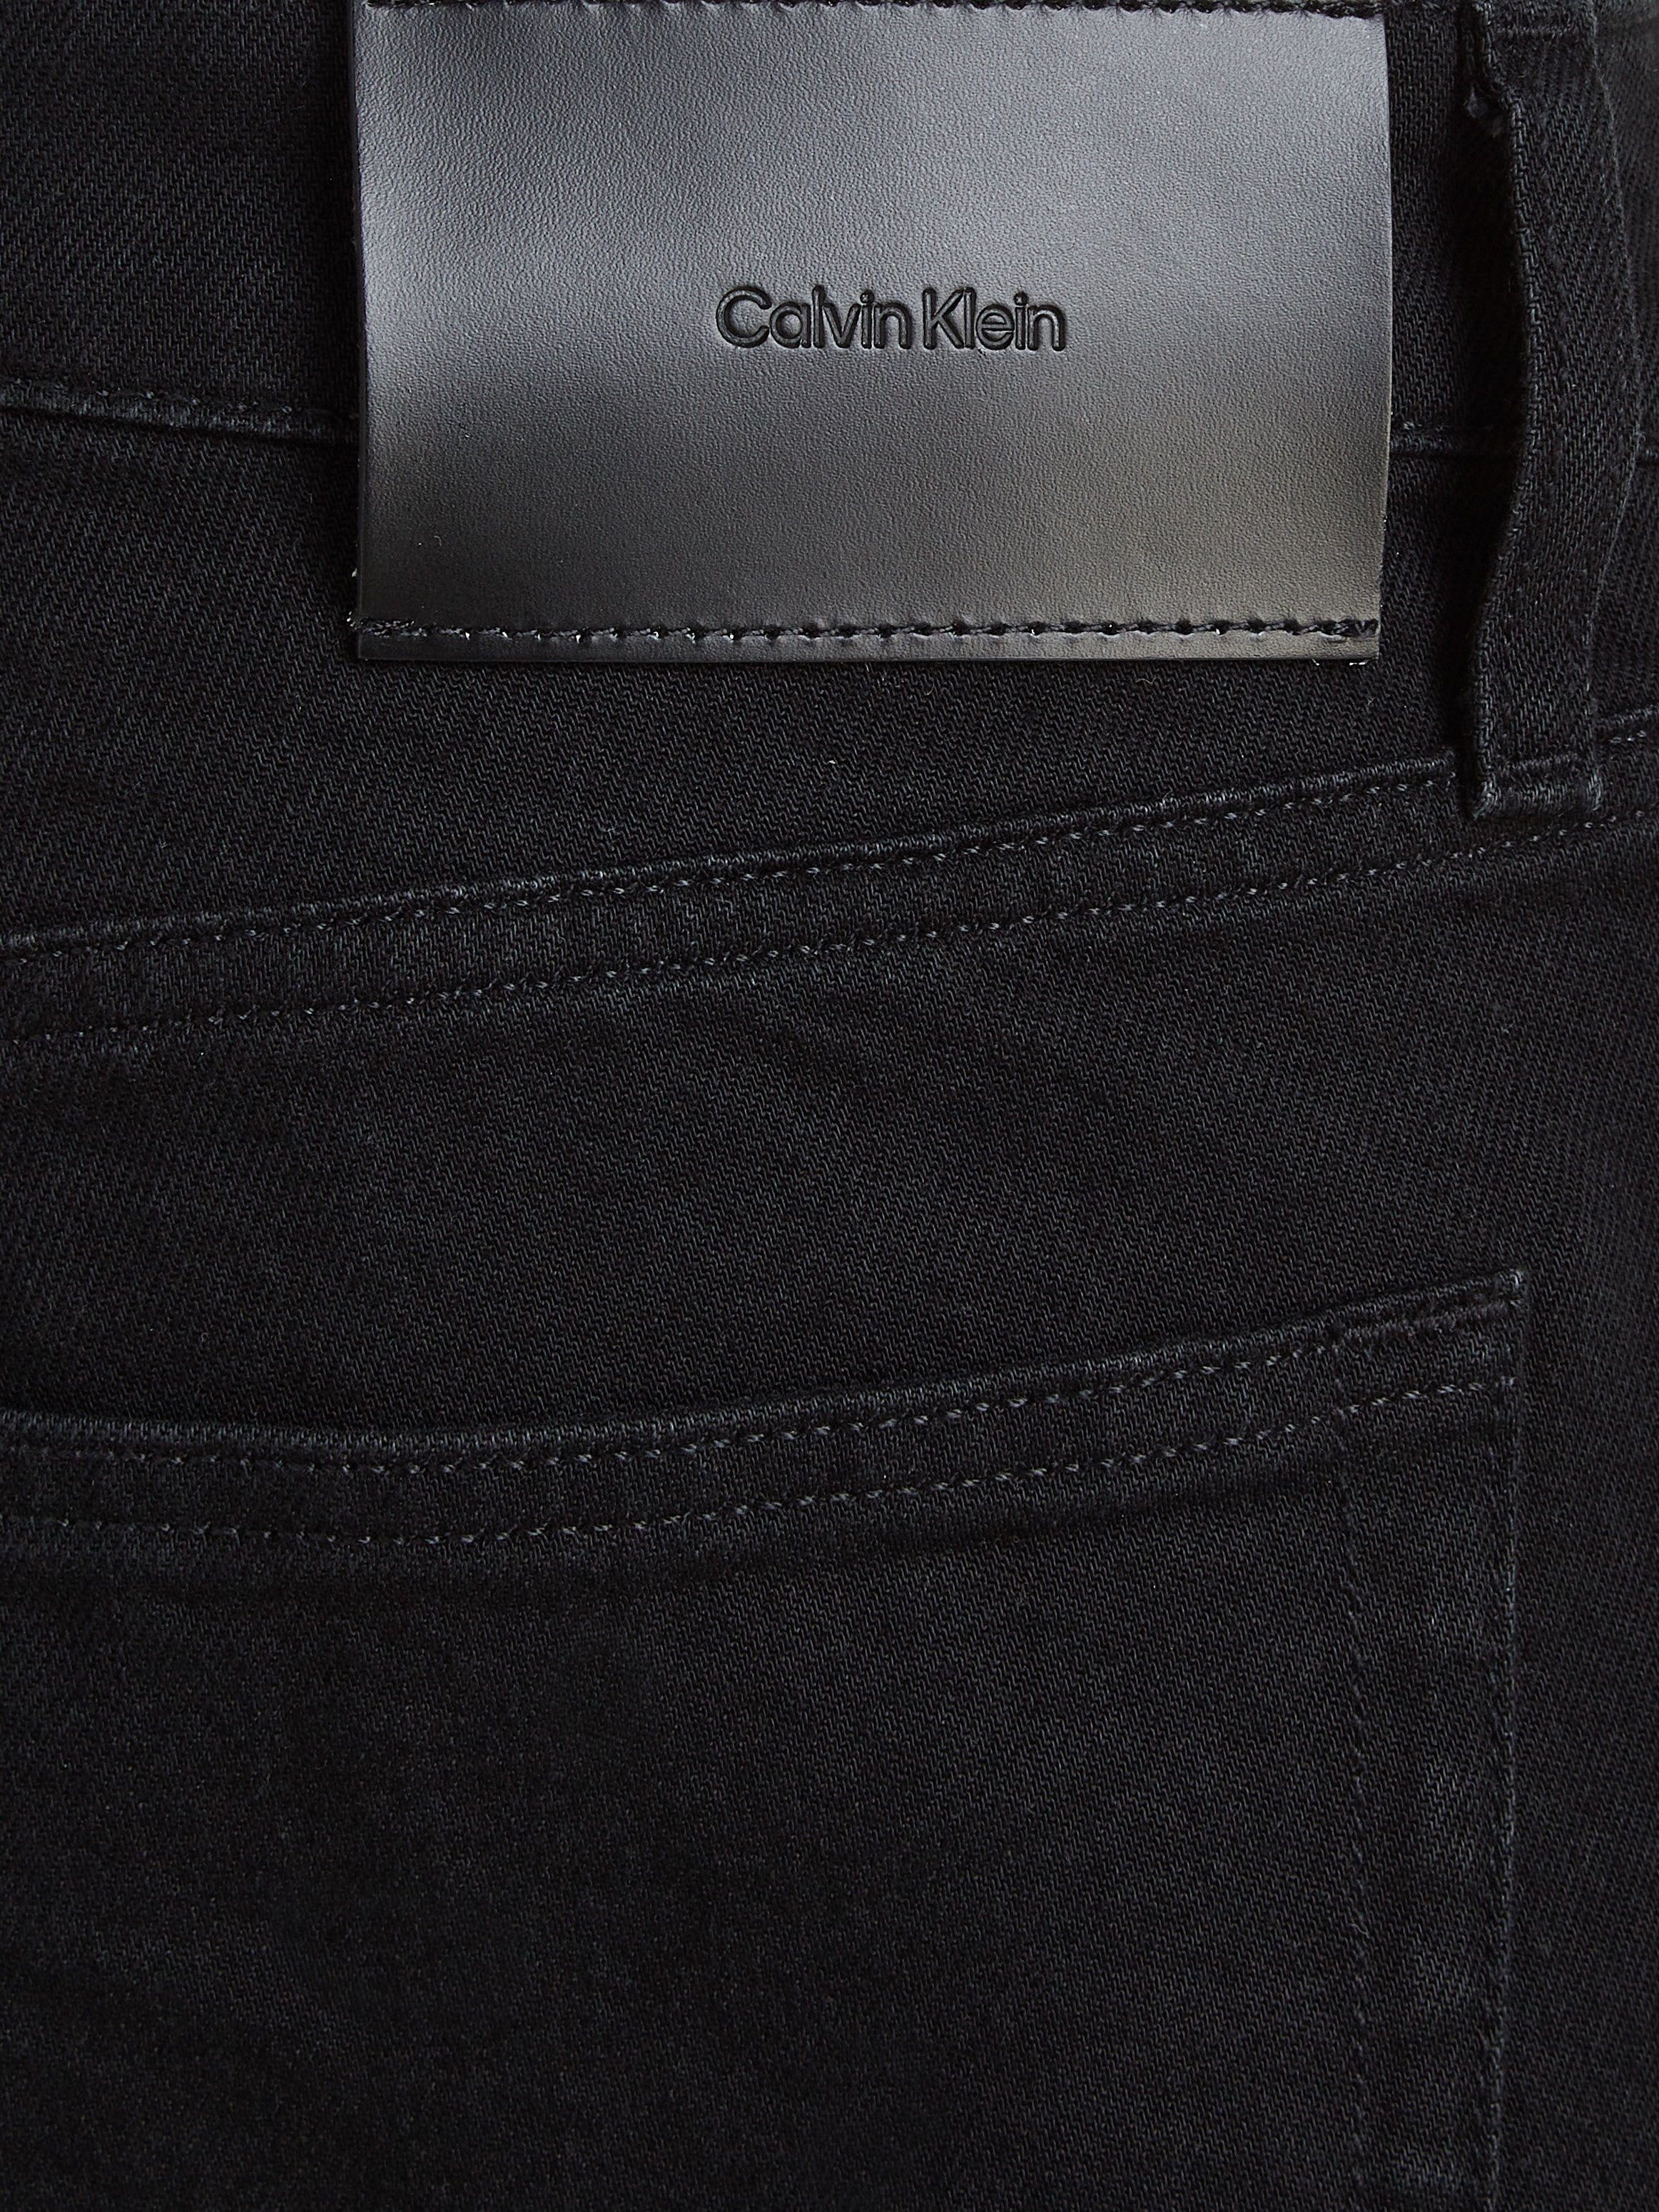 SLIM BLACK im FIT Klein Slim-fit-Jeans Black 5-Pocket-Style Denim Calvin RINSE